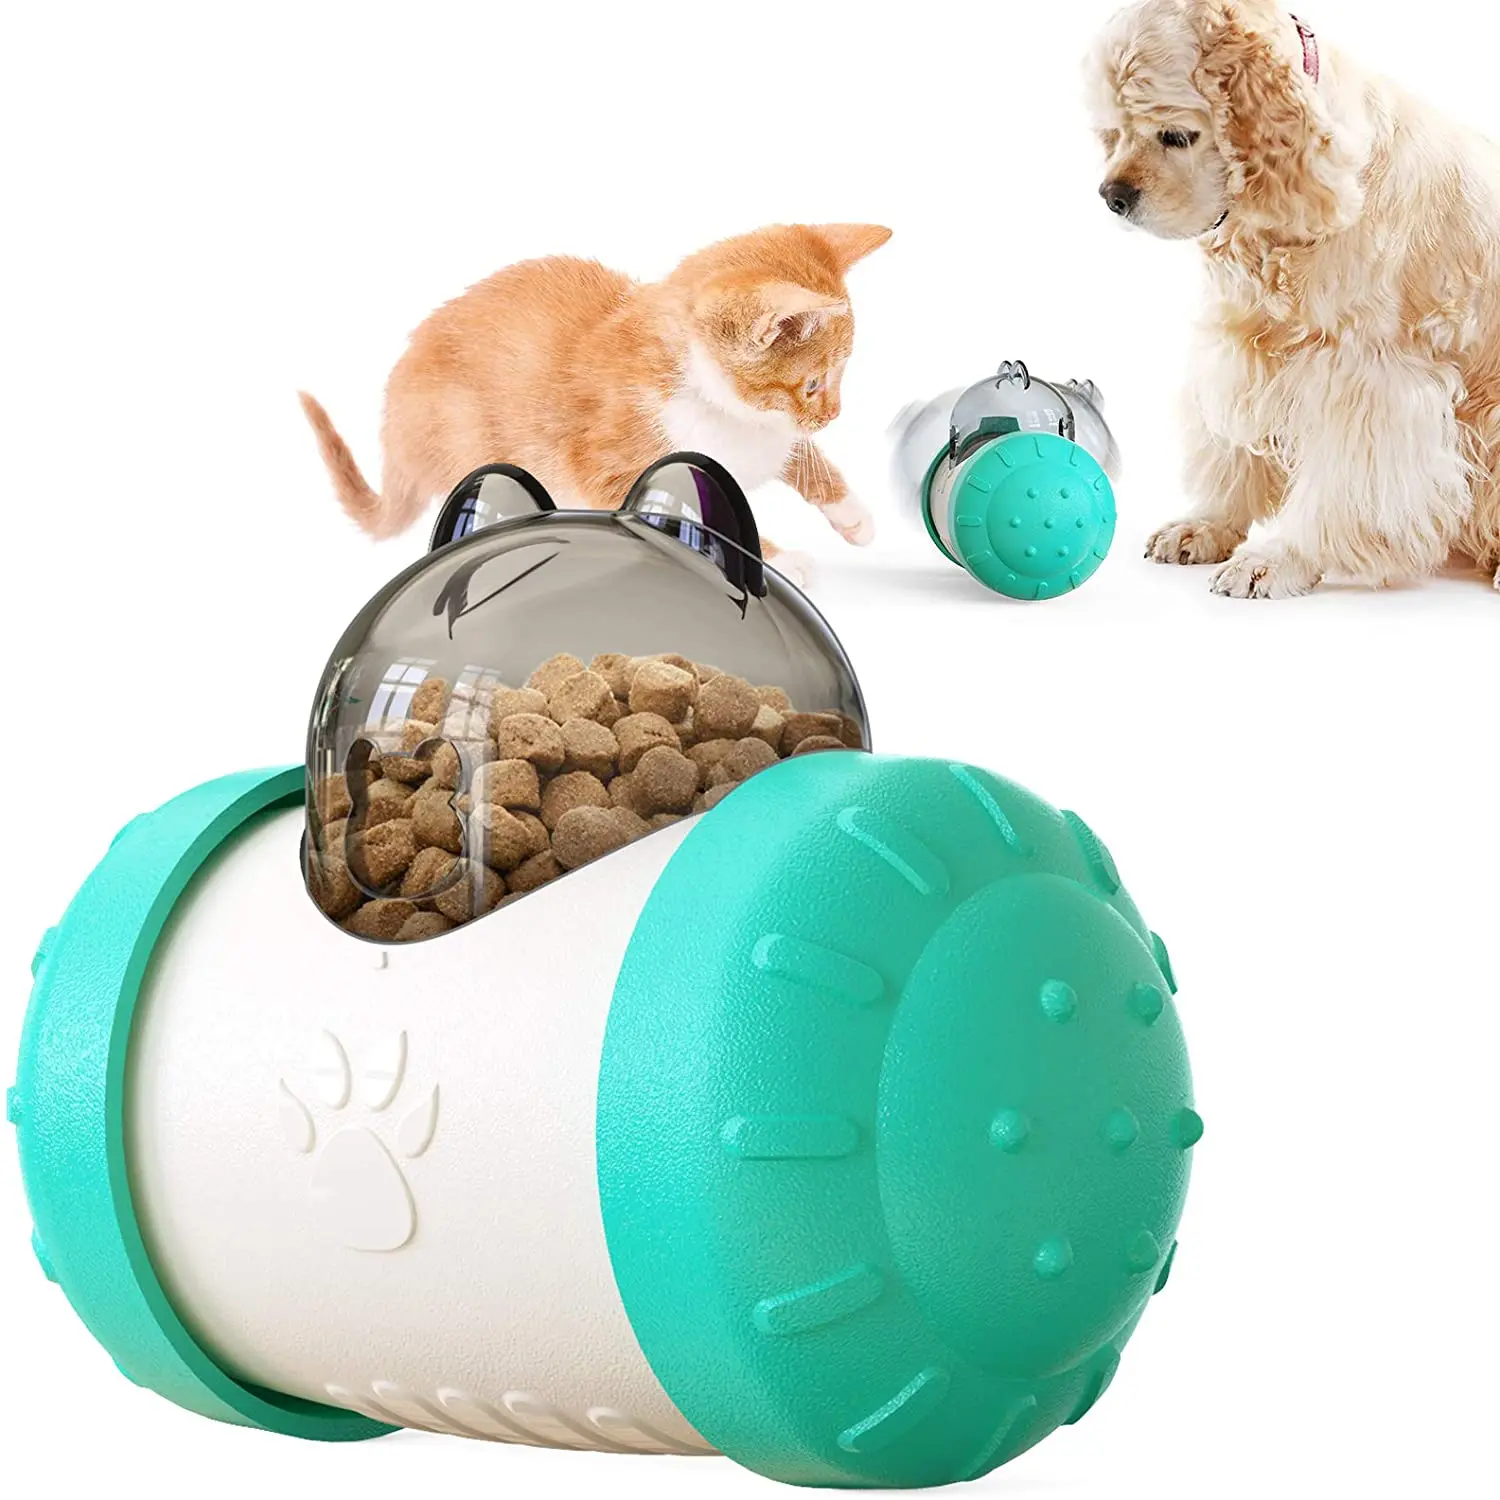 

Ulmpp Cat Toys Dog Balance Car Pet Leak Feeder Kitten Puppy Tumbler Slow Bowl Puzzle Toy Exercise Game Feeding Cat Accessories